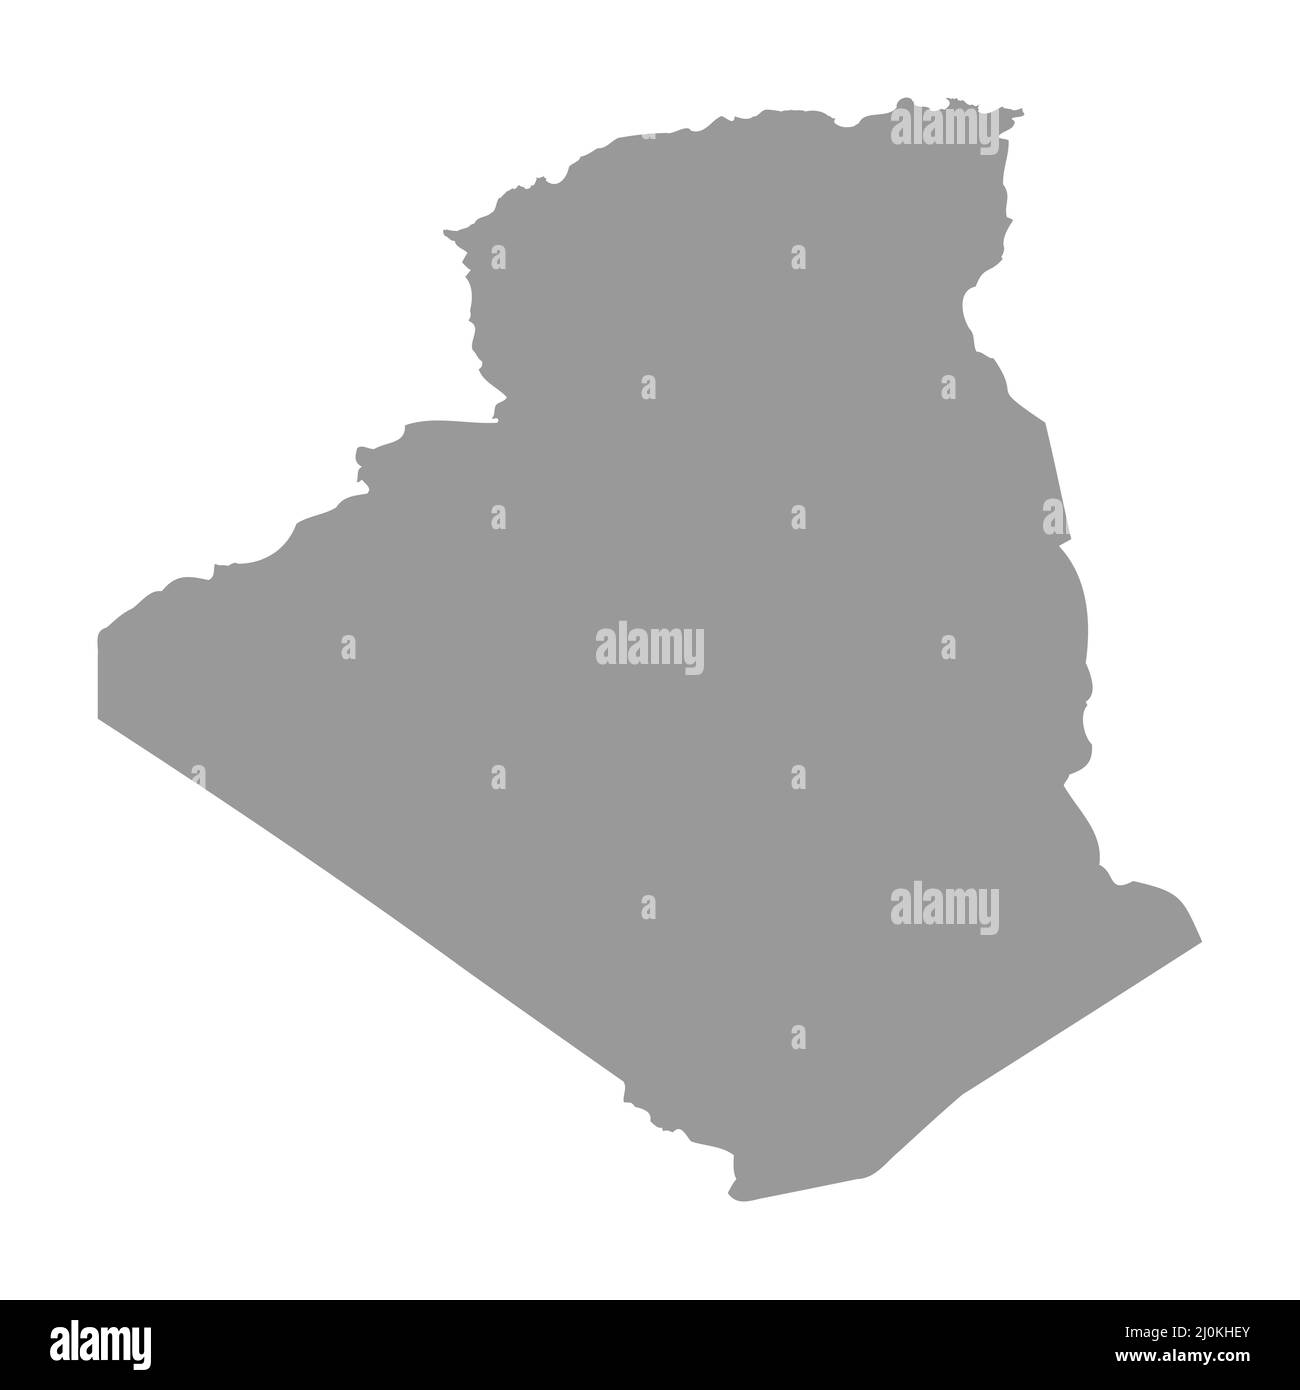 Algeria vector country map silhouette Stock Vector